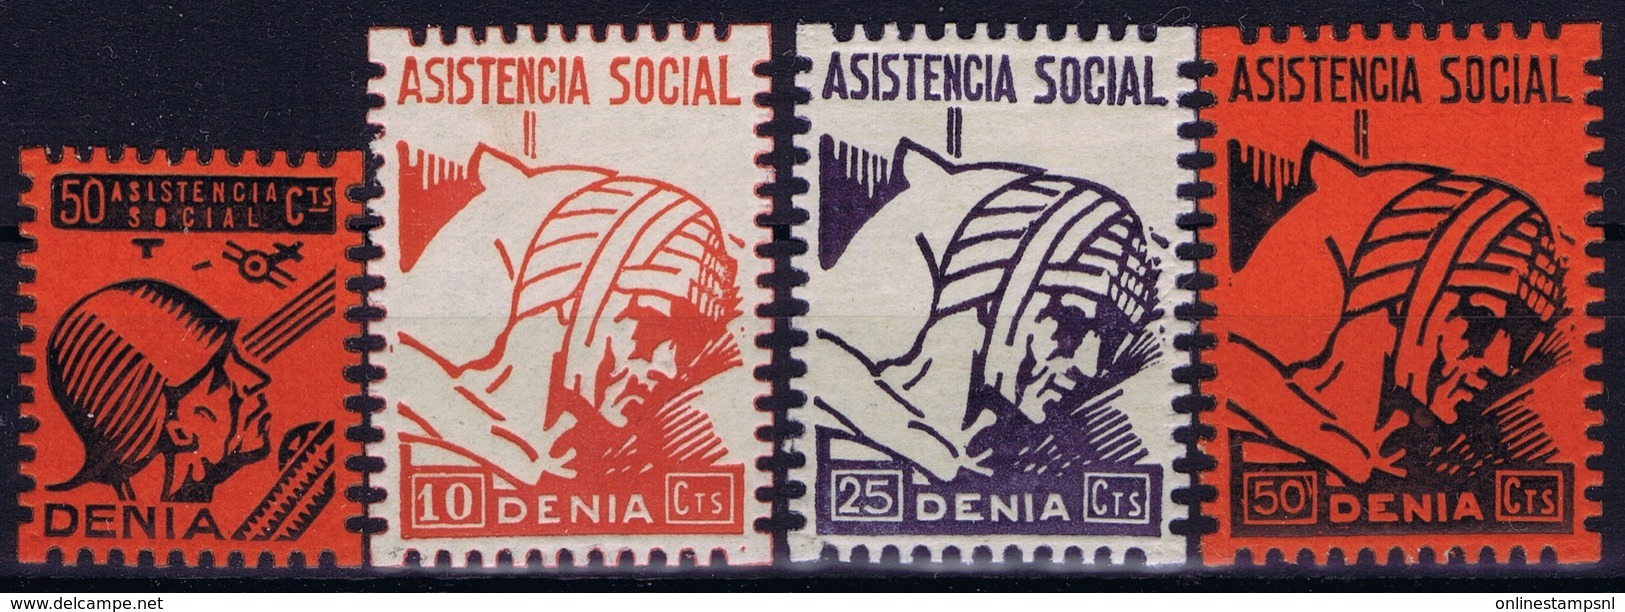 Spian : Asistencia Social Denia - Spanish Civil War Labels